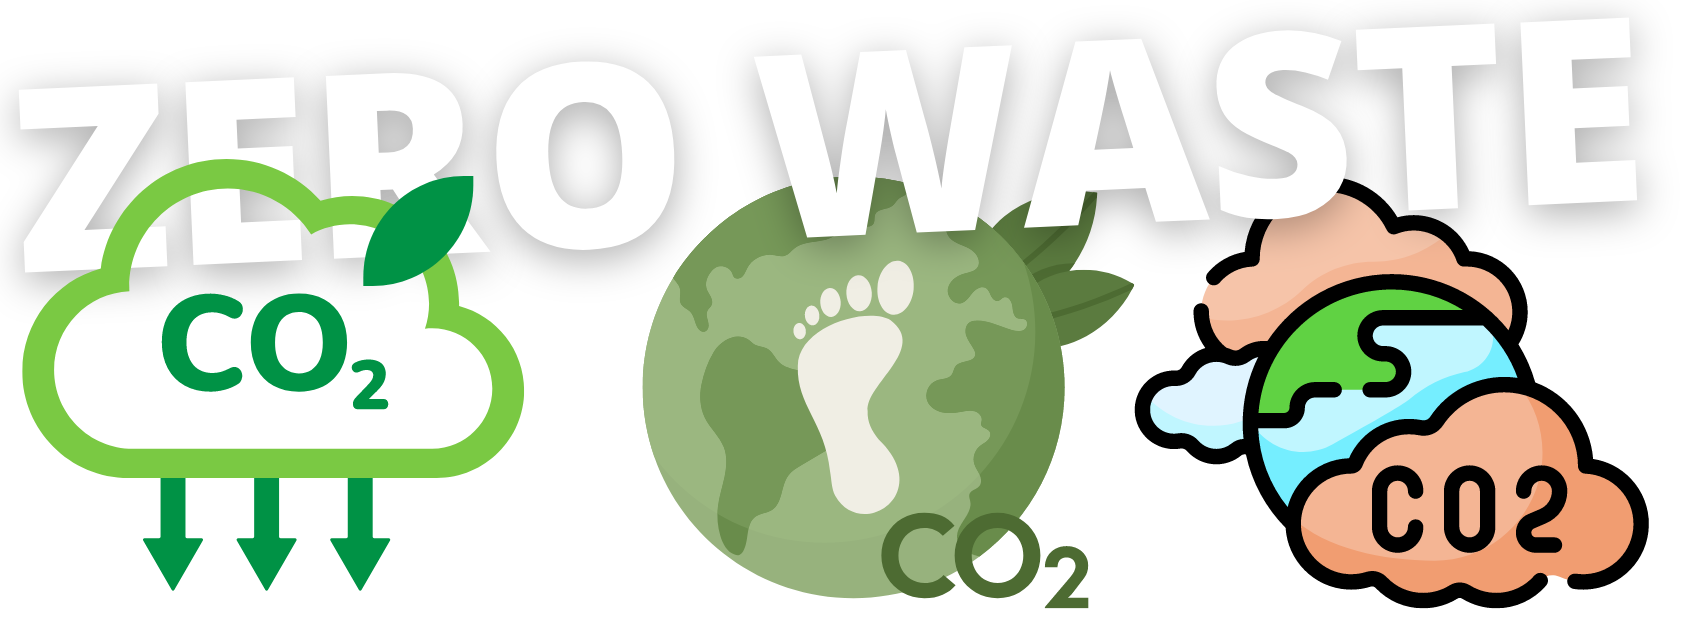 CO2 voetafdruk